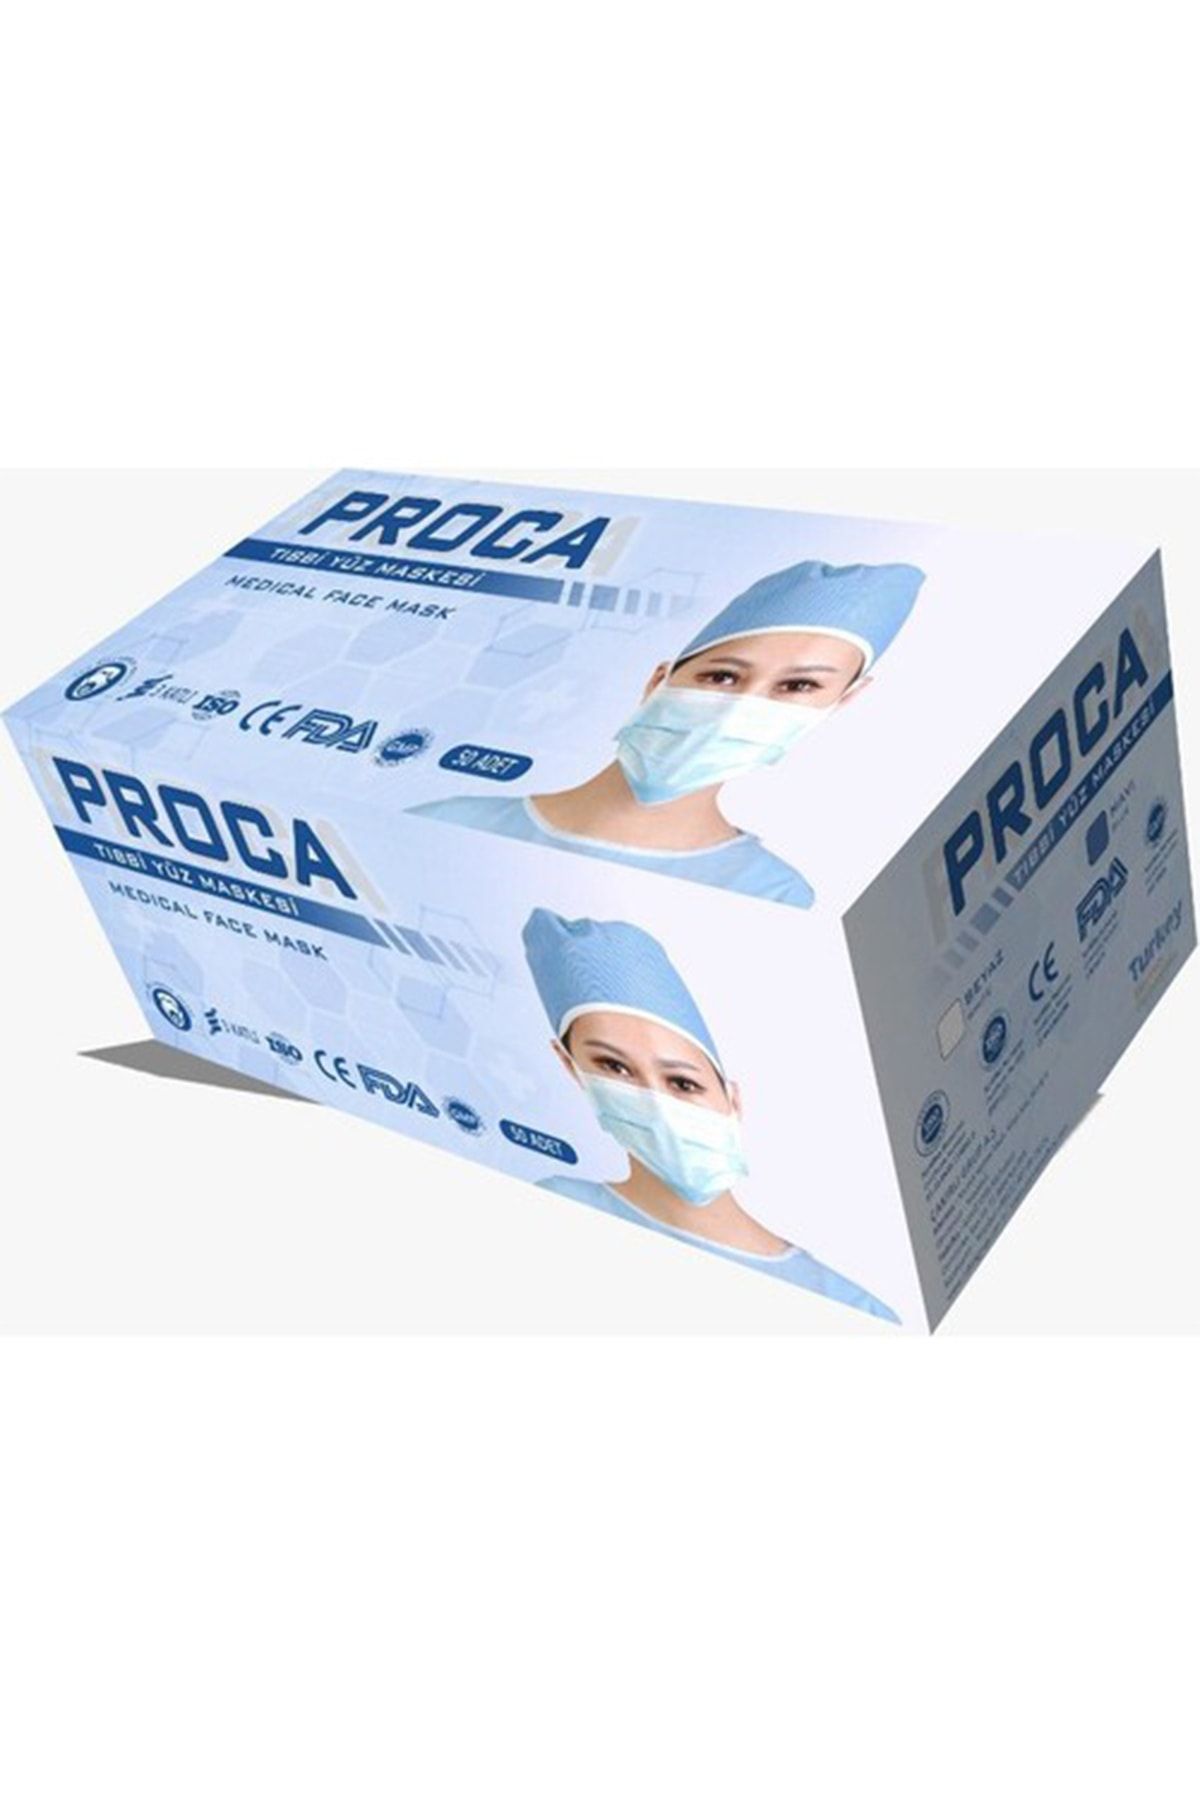 PROCA 3 Katlı Cerrahi Maske Beyaz 50 Adet